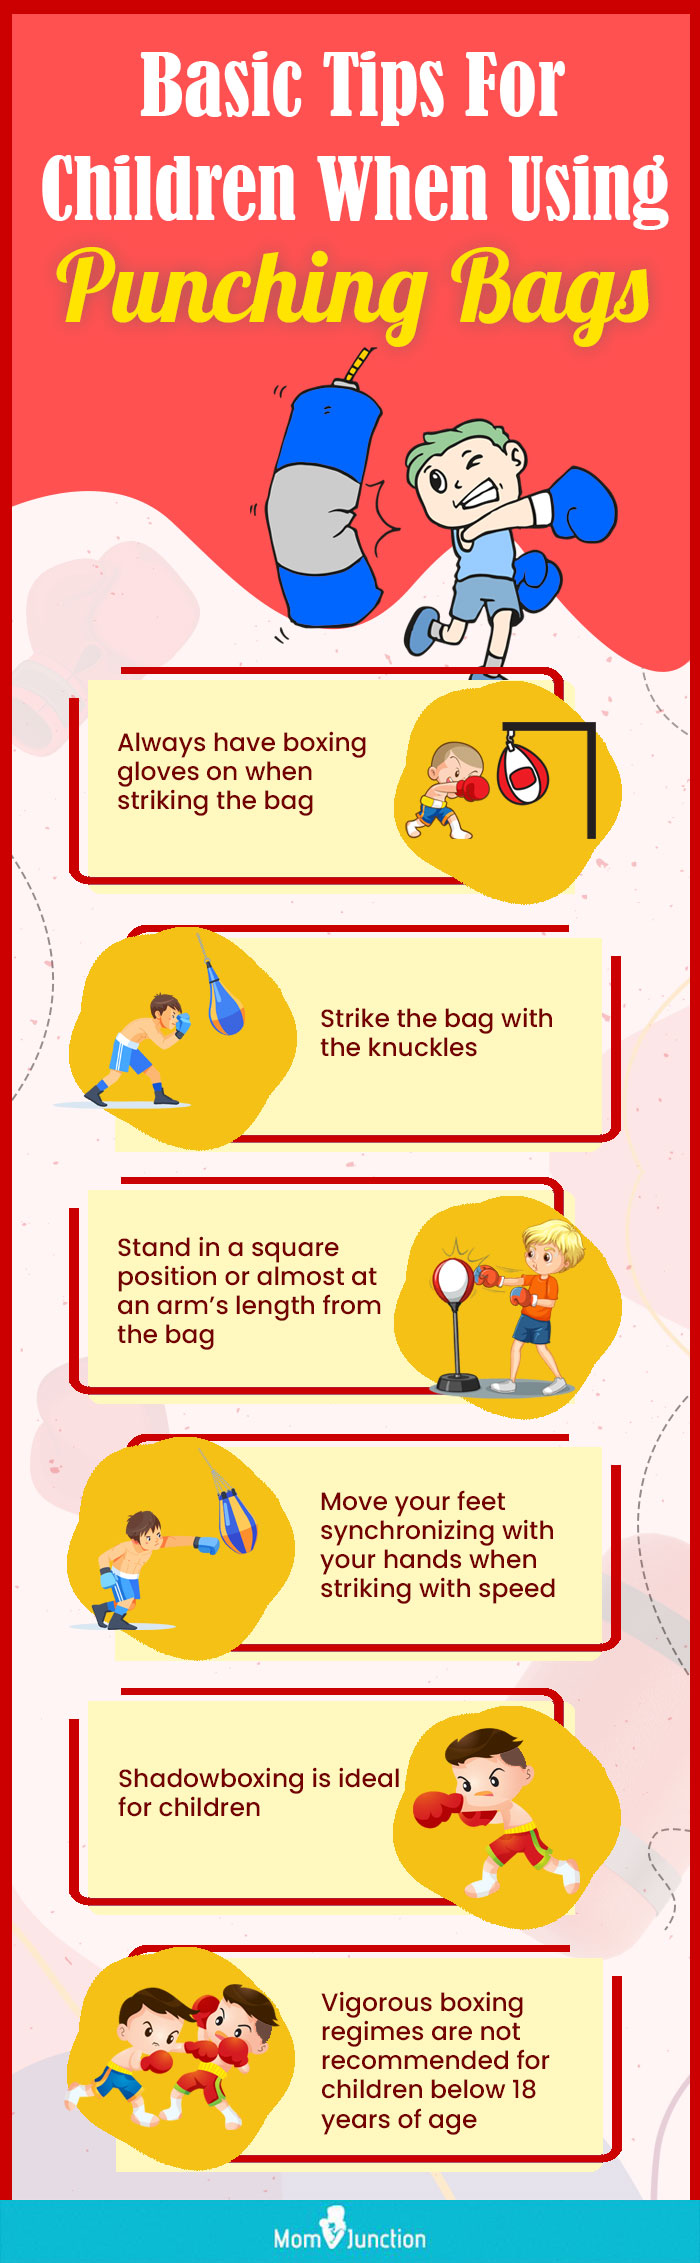 Basic Tips For Children When Using Punching Bags